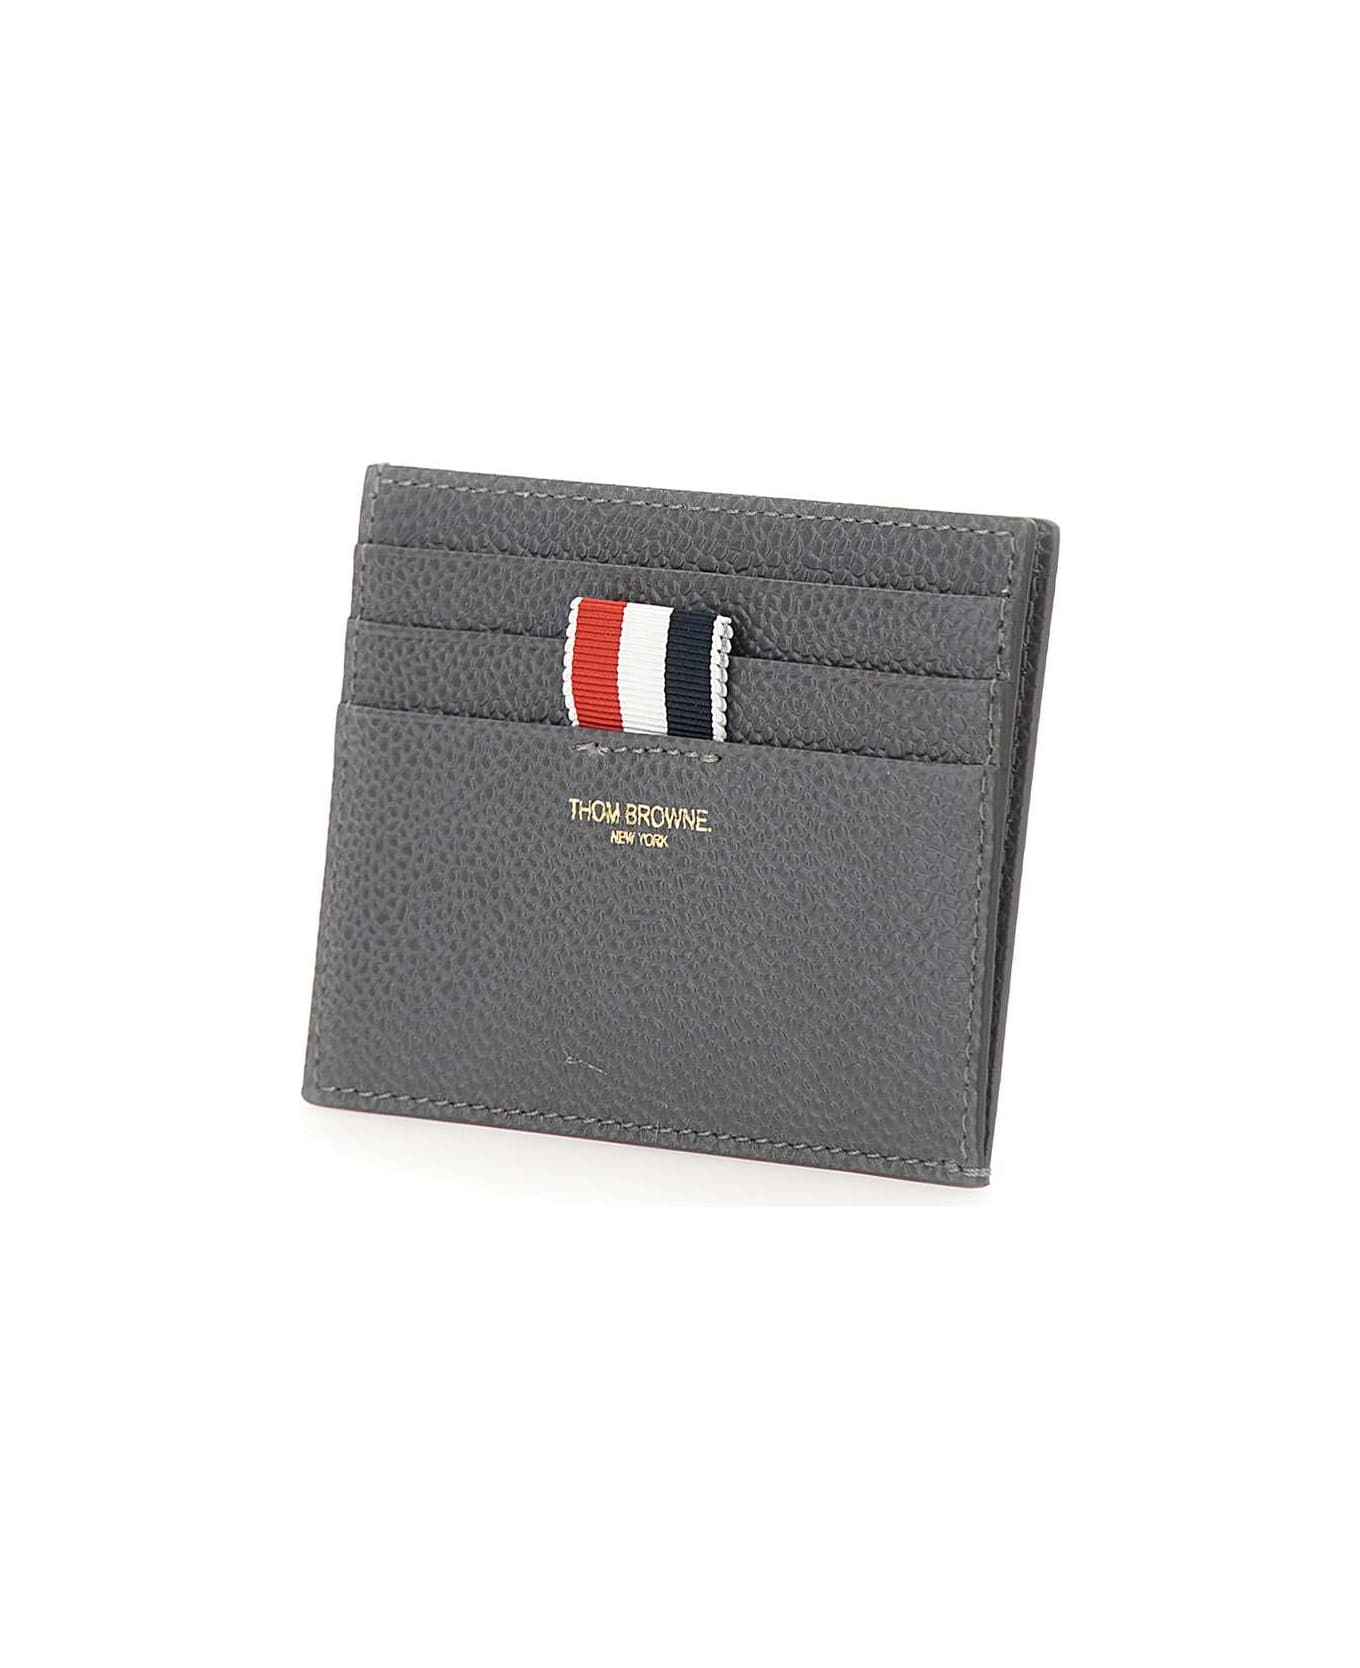 Thom Browne Leather 'card Holder' - GREY 財布